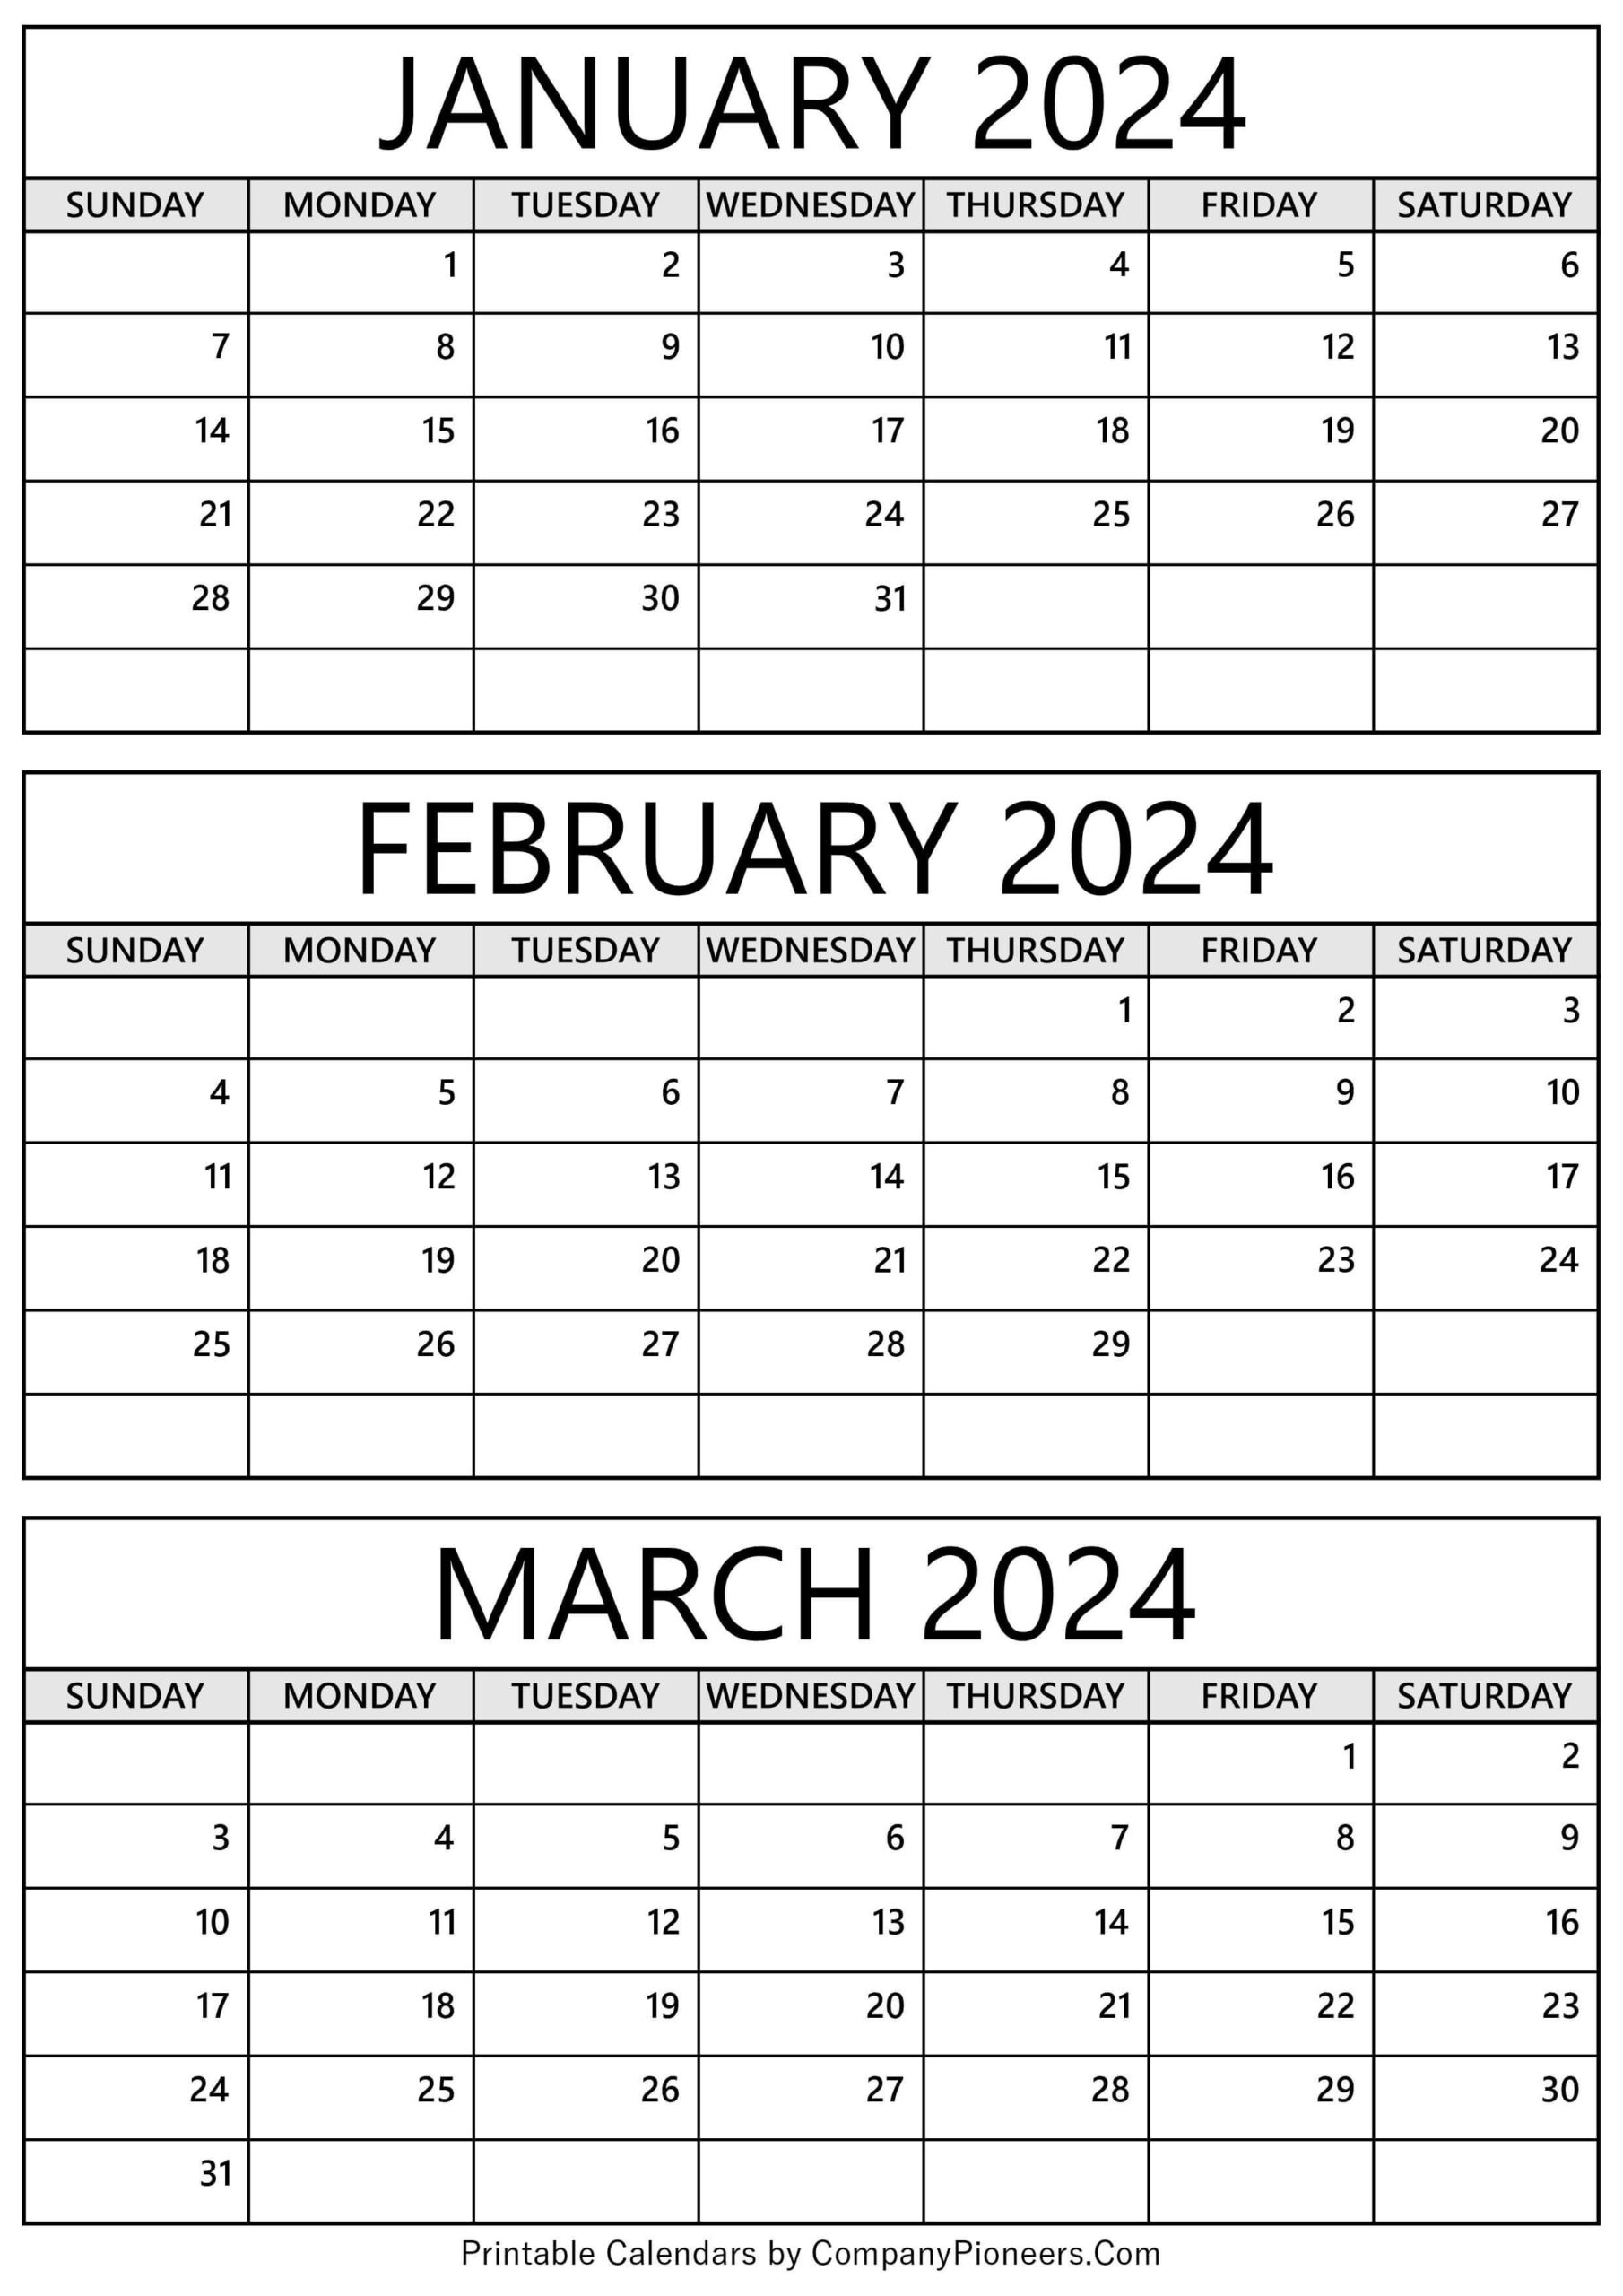 January February March 2024 Calendar Printable - Template for Printable Calendar 2024 January February March